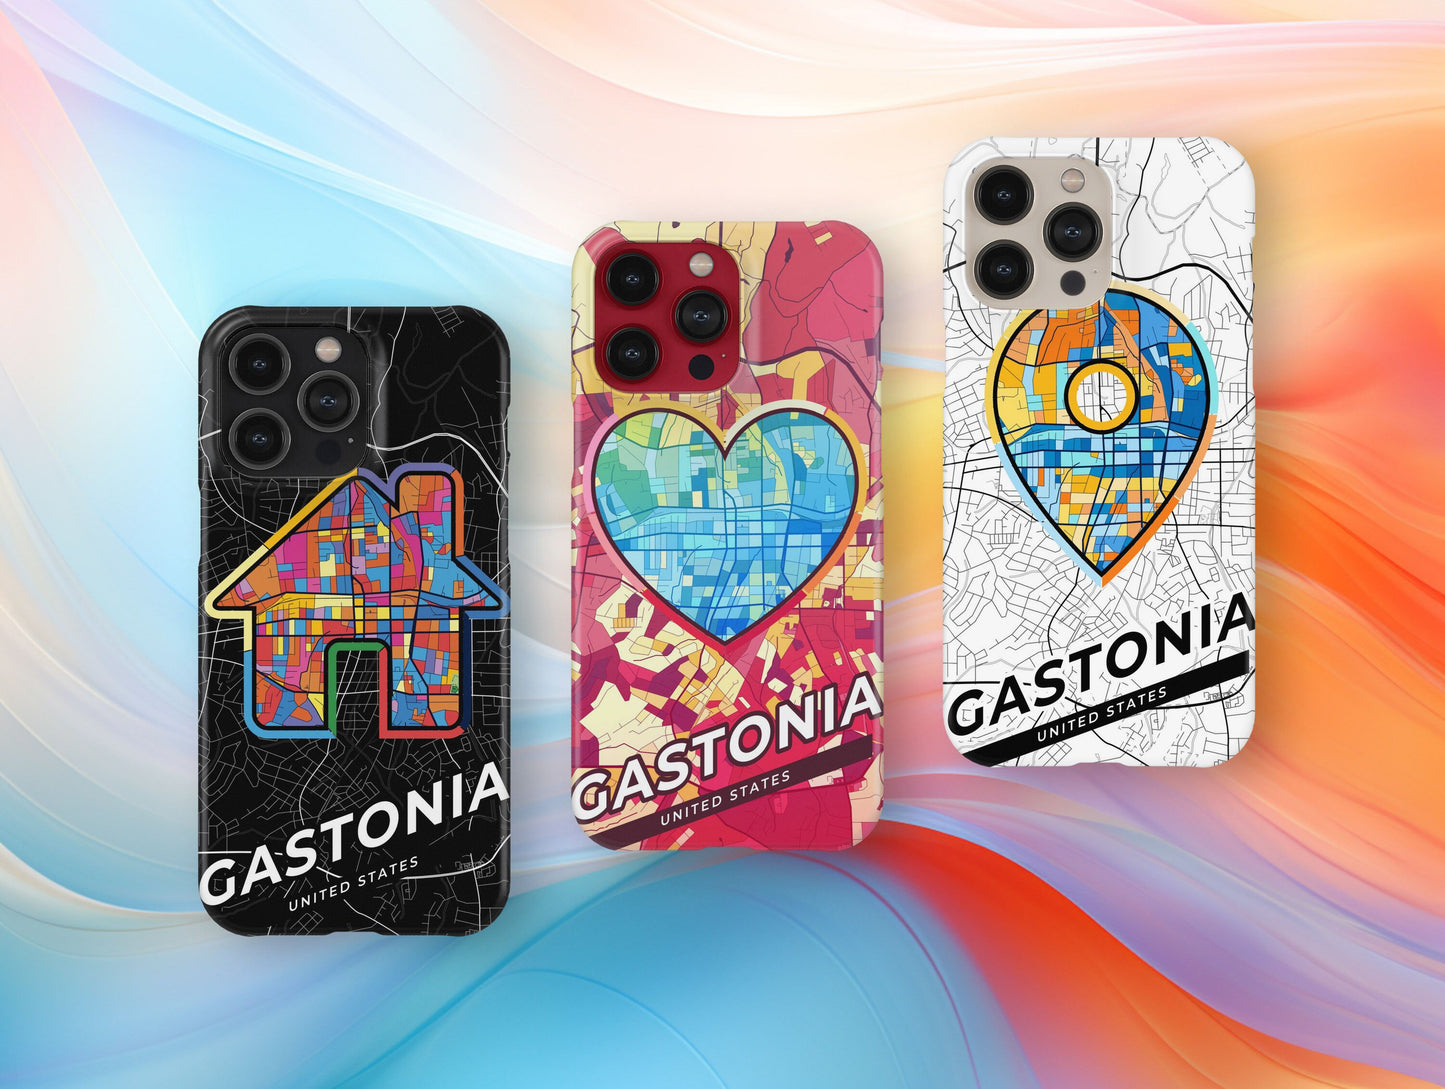 Gastonia North Carolina slim phone case with colorful icon. Birthday, wedding or housewarming gift. Couple match cases.